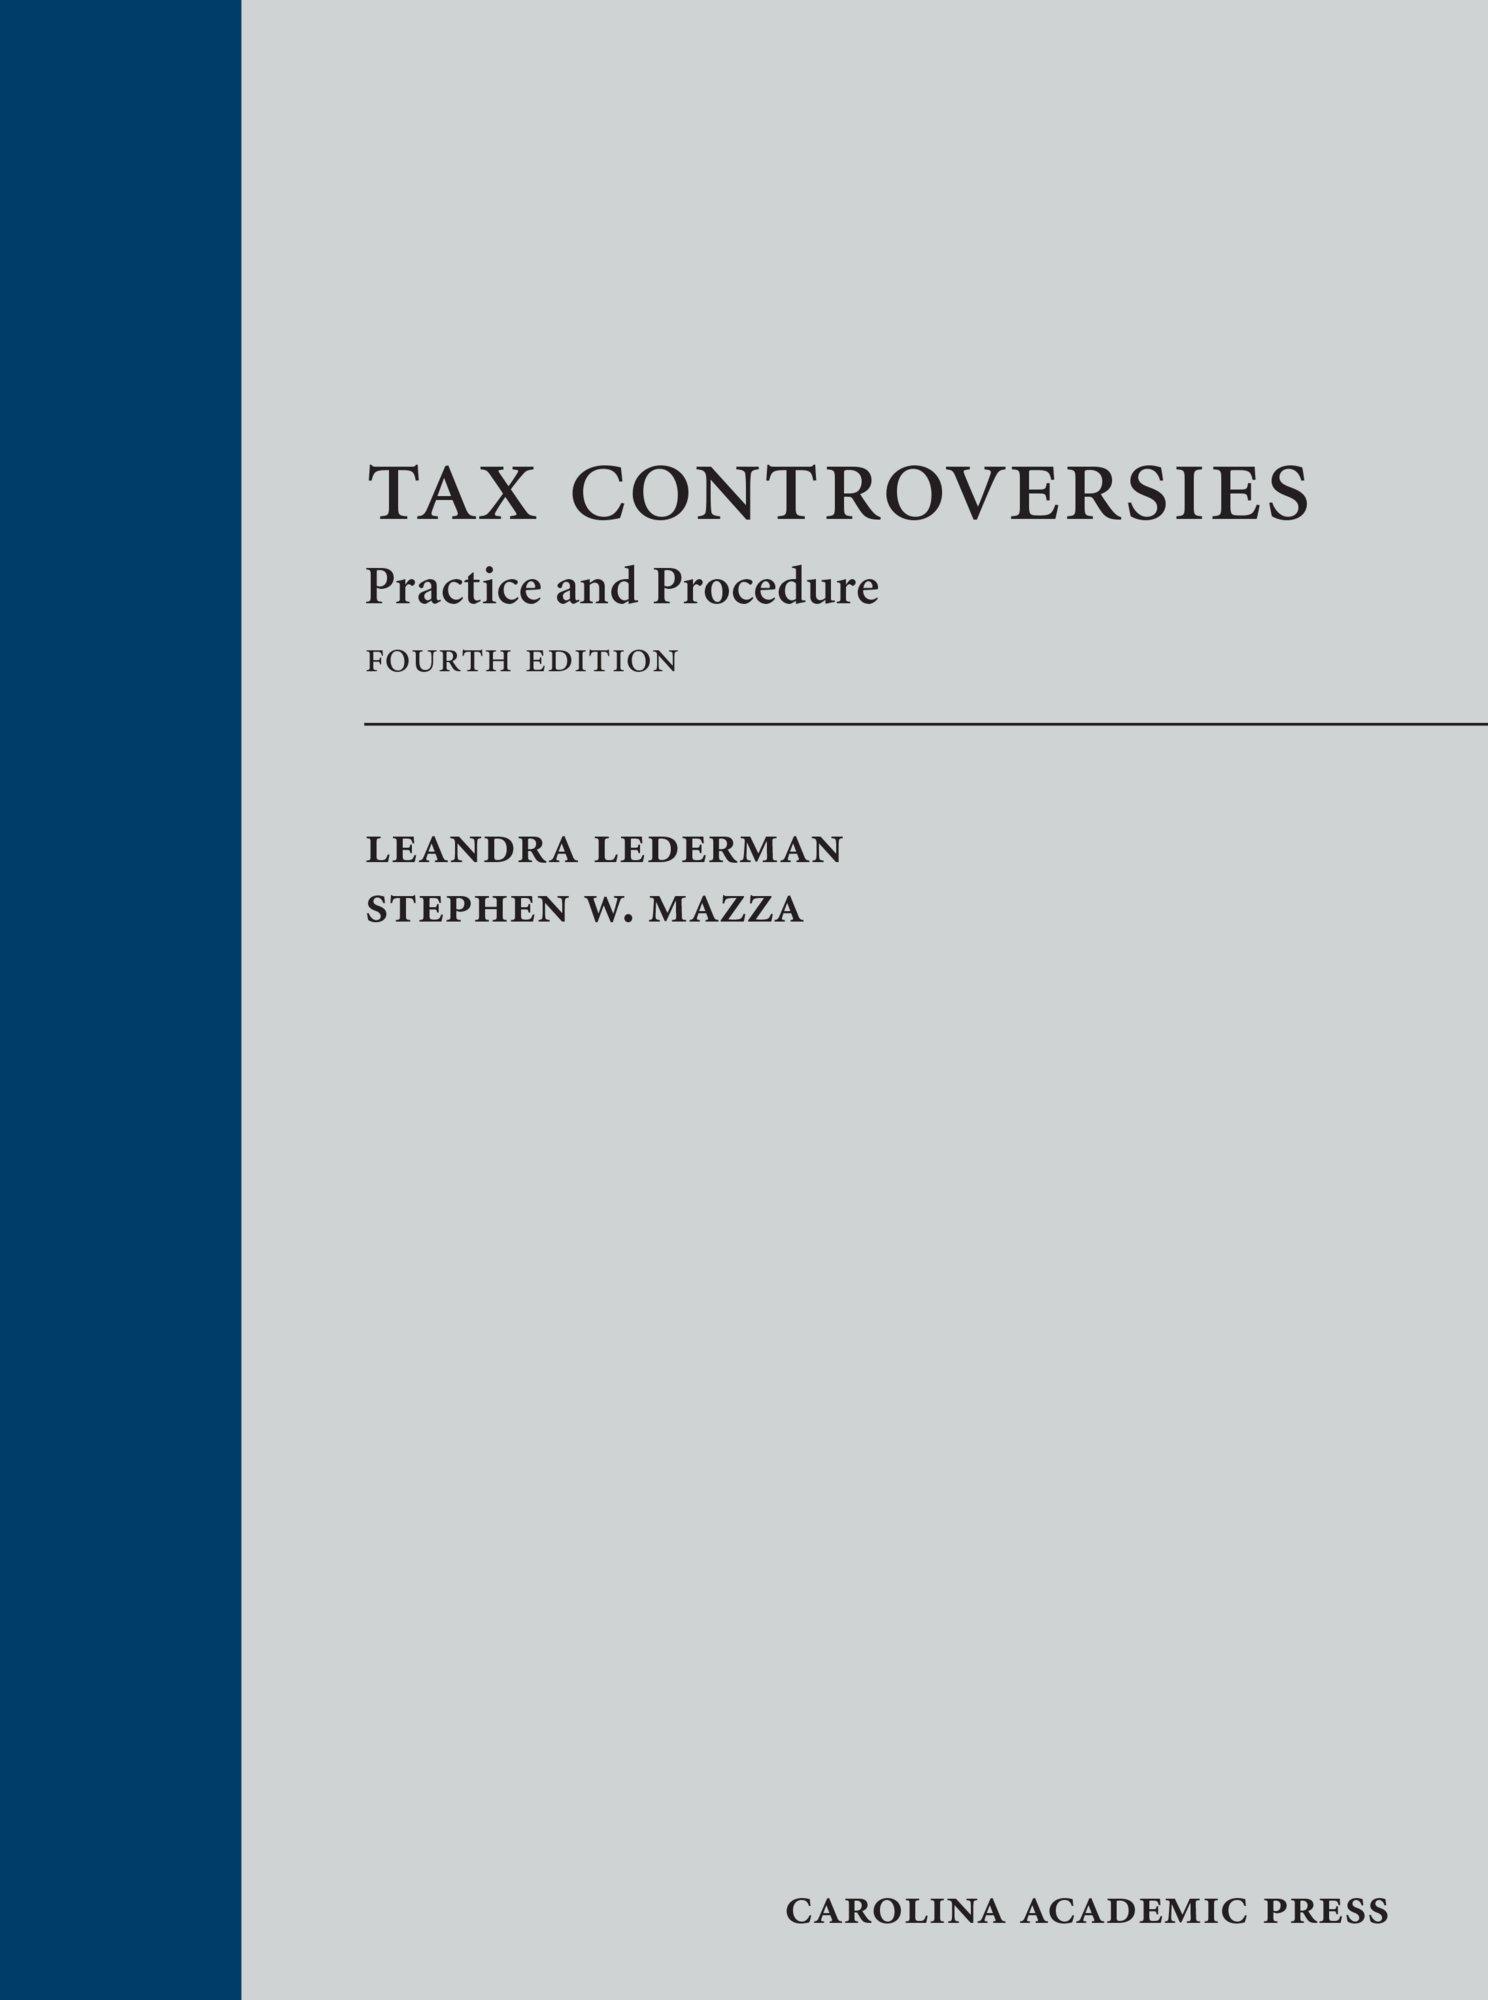 tax controversies practice and procedure 4th edition leandra lederman, stephen mazza 1531004202, 9781531004200